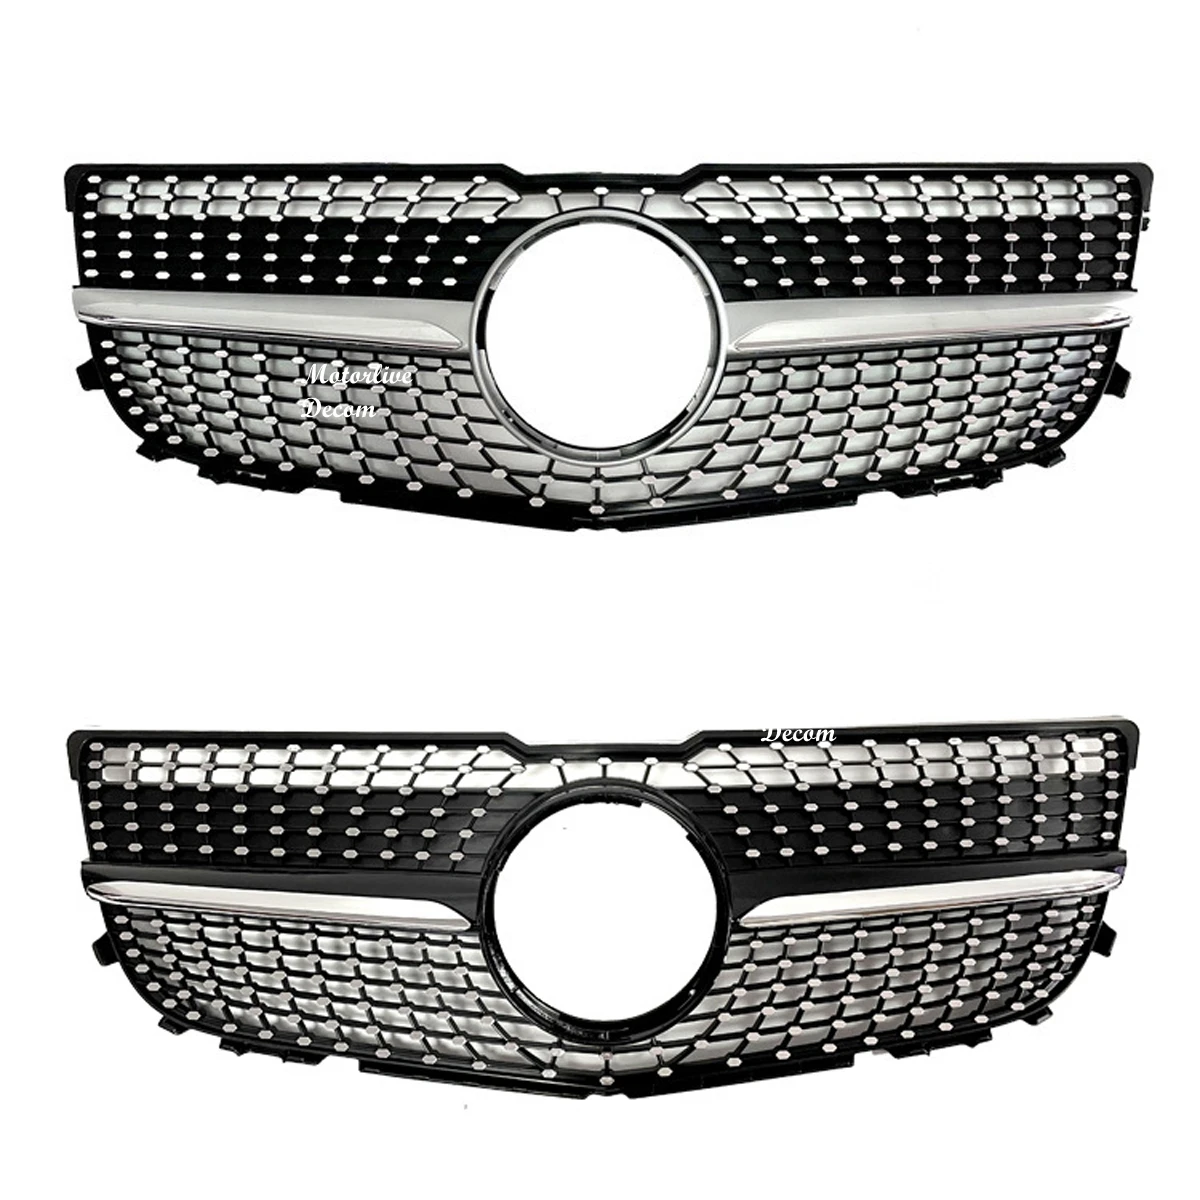 

Алмазная решетка для Mercedes Benz X204 Серебристая/Черная передняя решетка X204 GLK CLASS GLK250 GLK350 2013 2014 2015